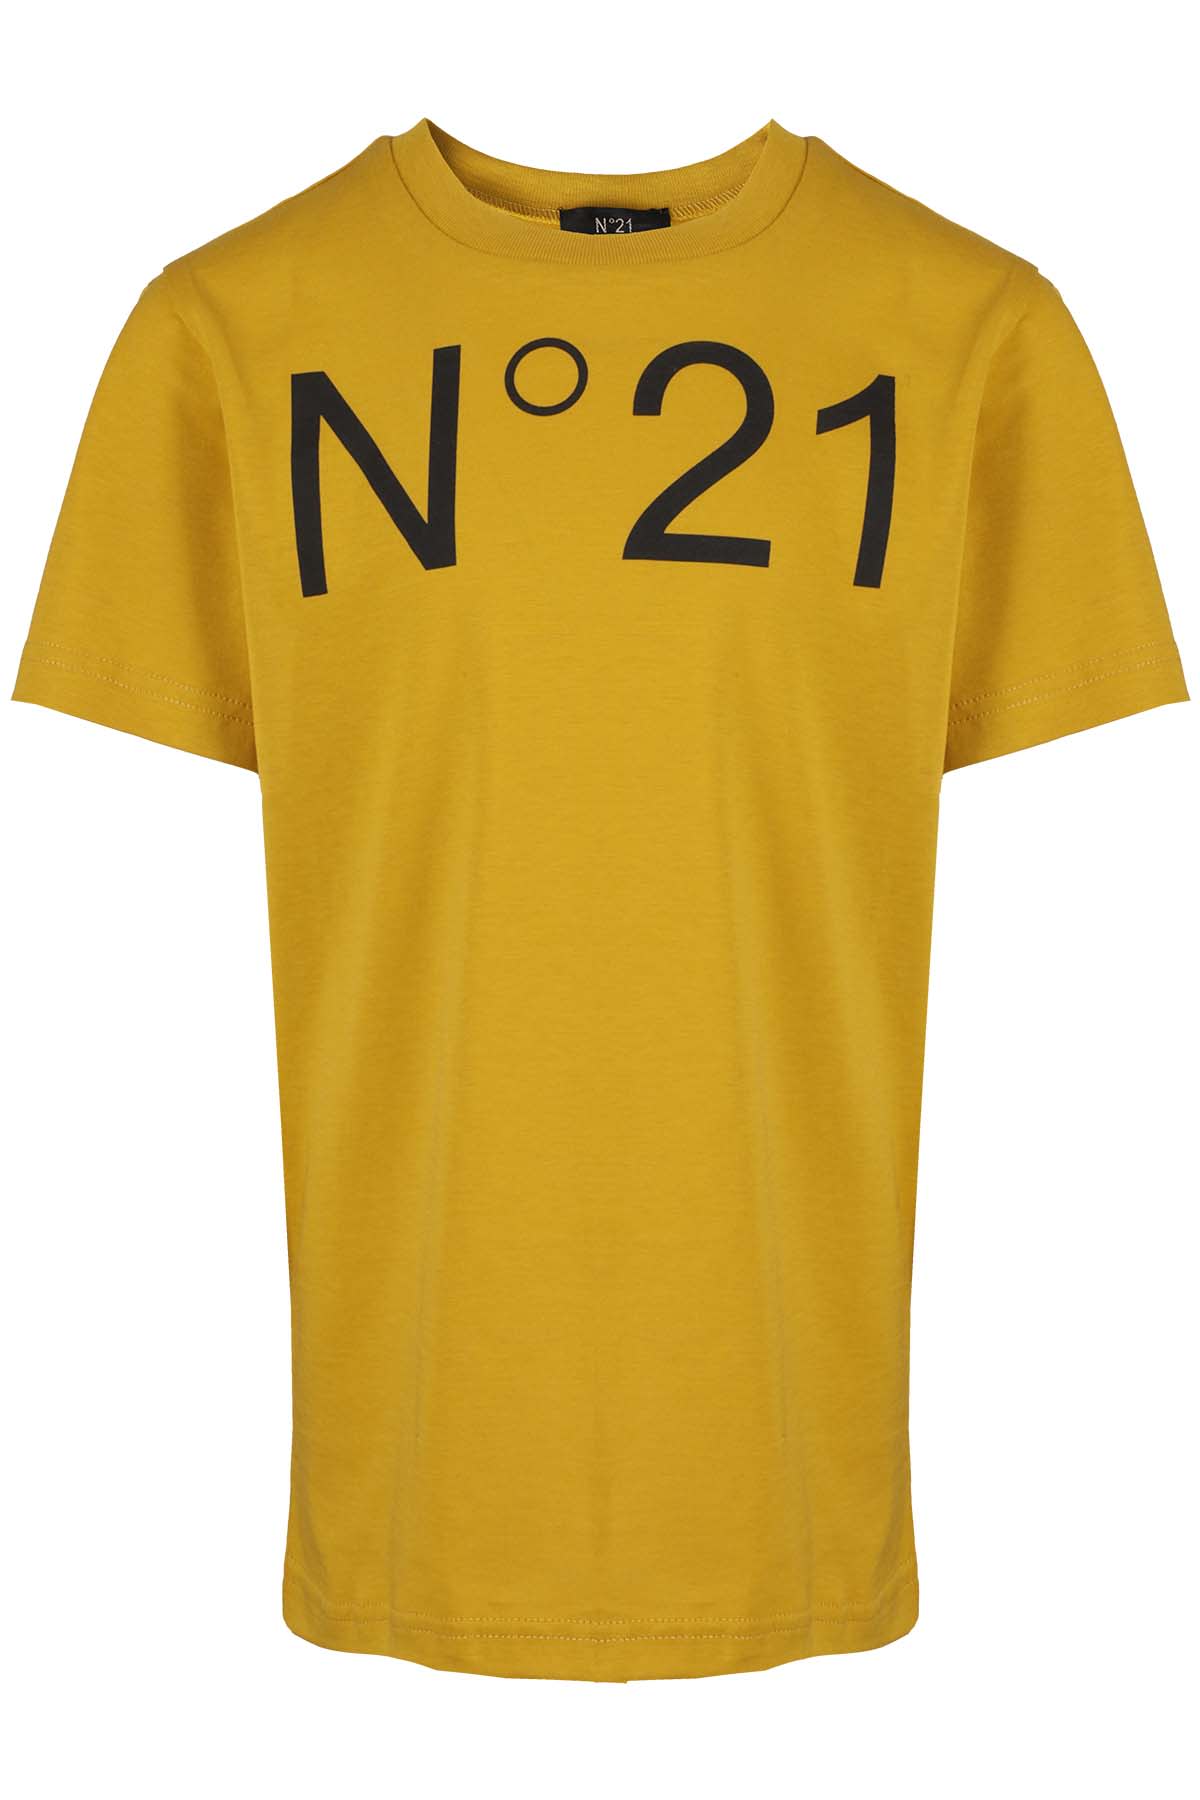 N°21 Kids' Maglietta In Mustard Yellow